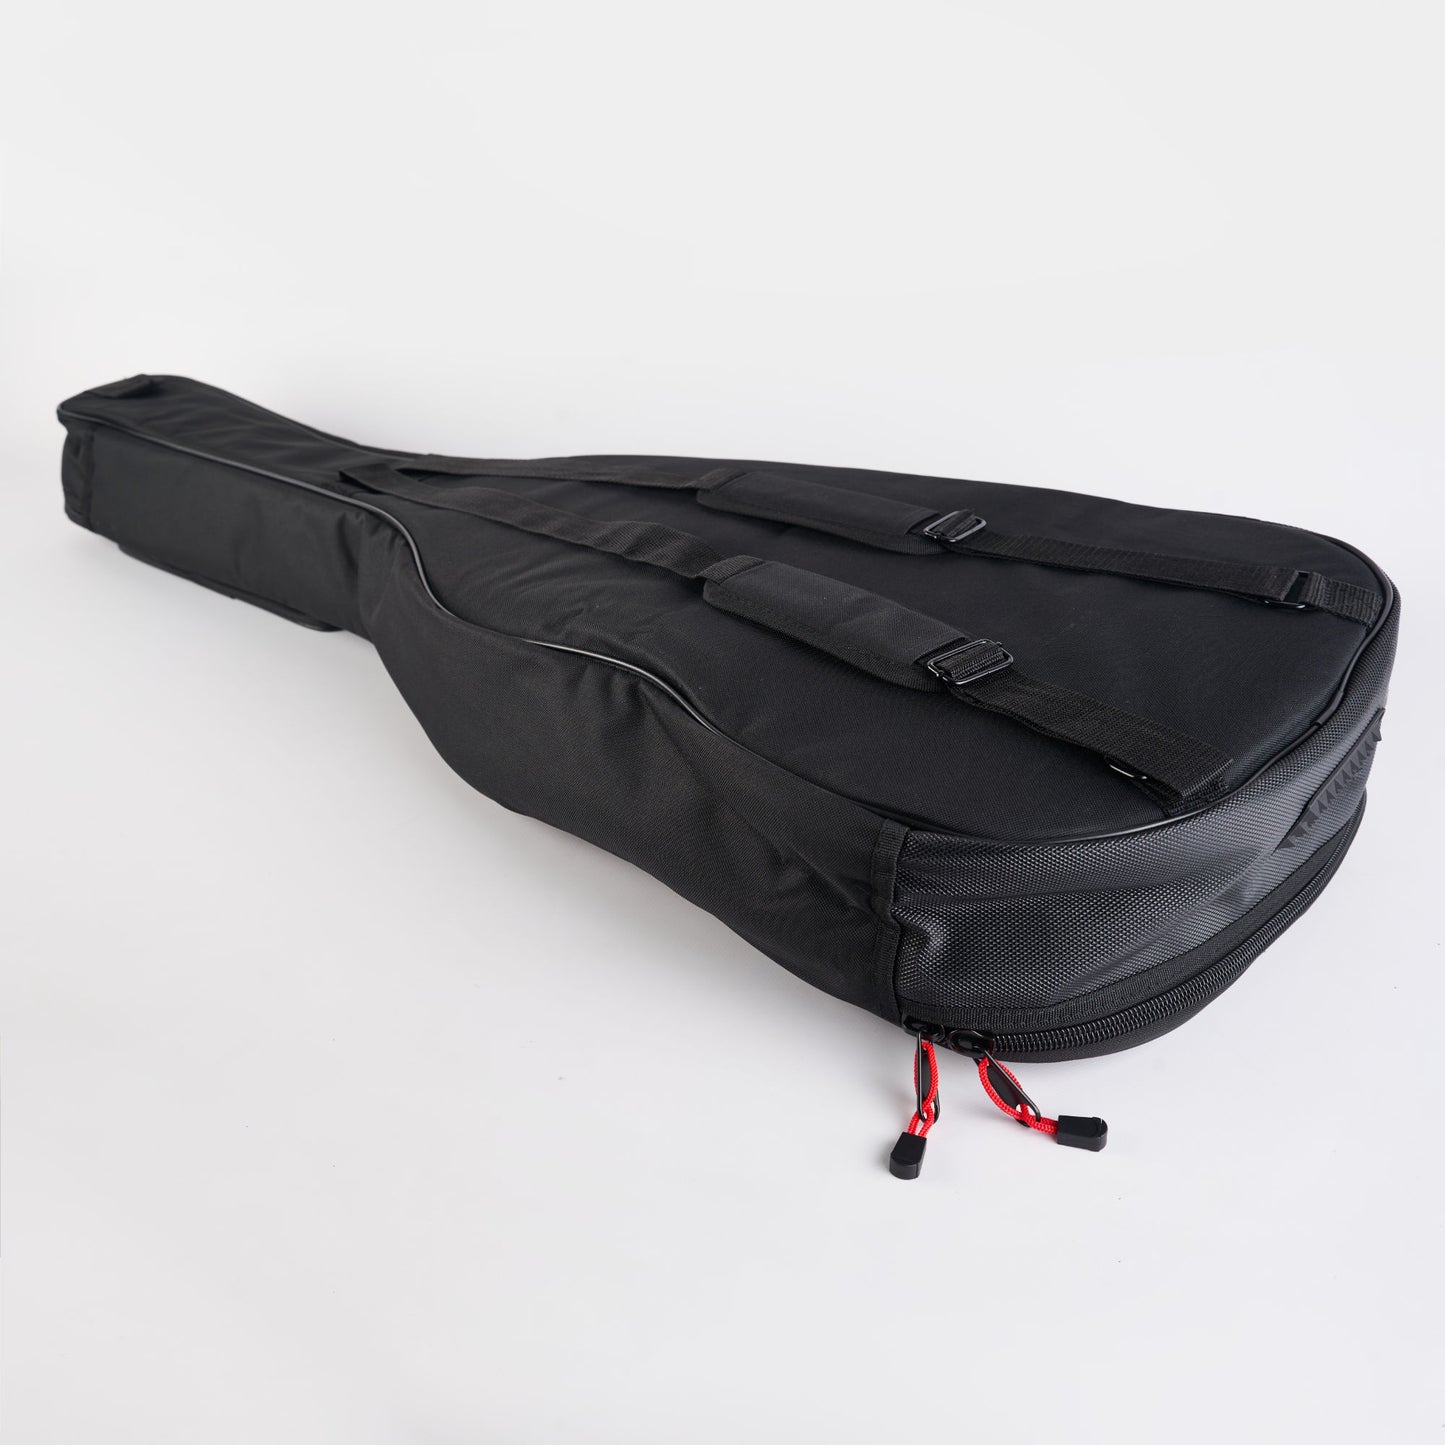 Xtreme Pro Guitar Bag